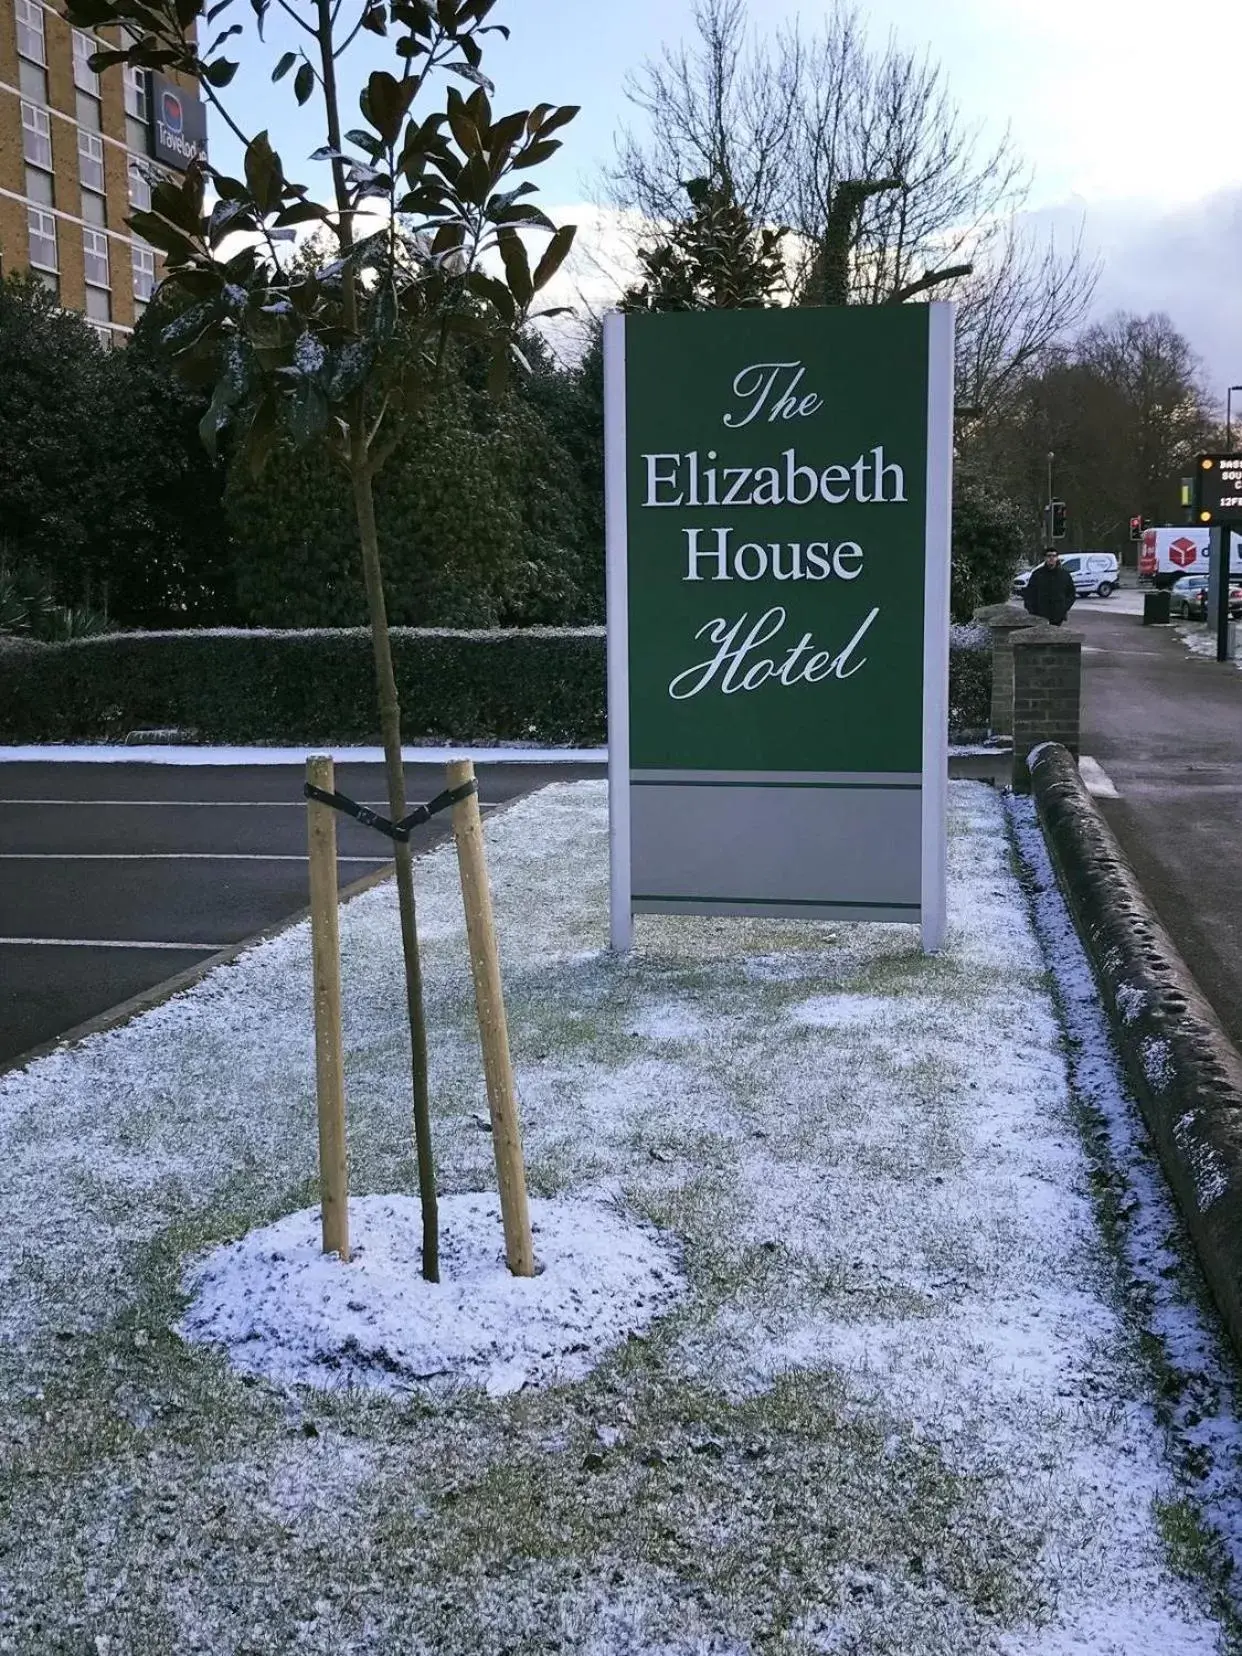 The Elizabeth House Hotel